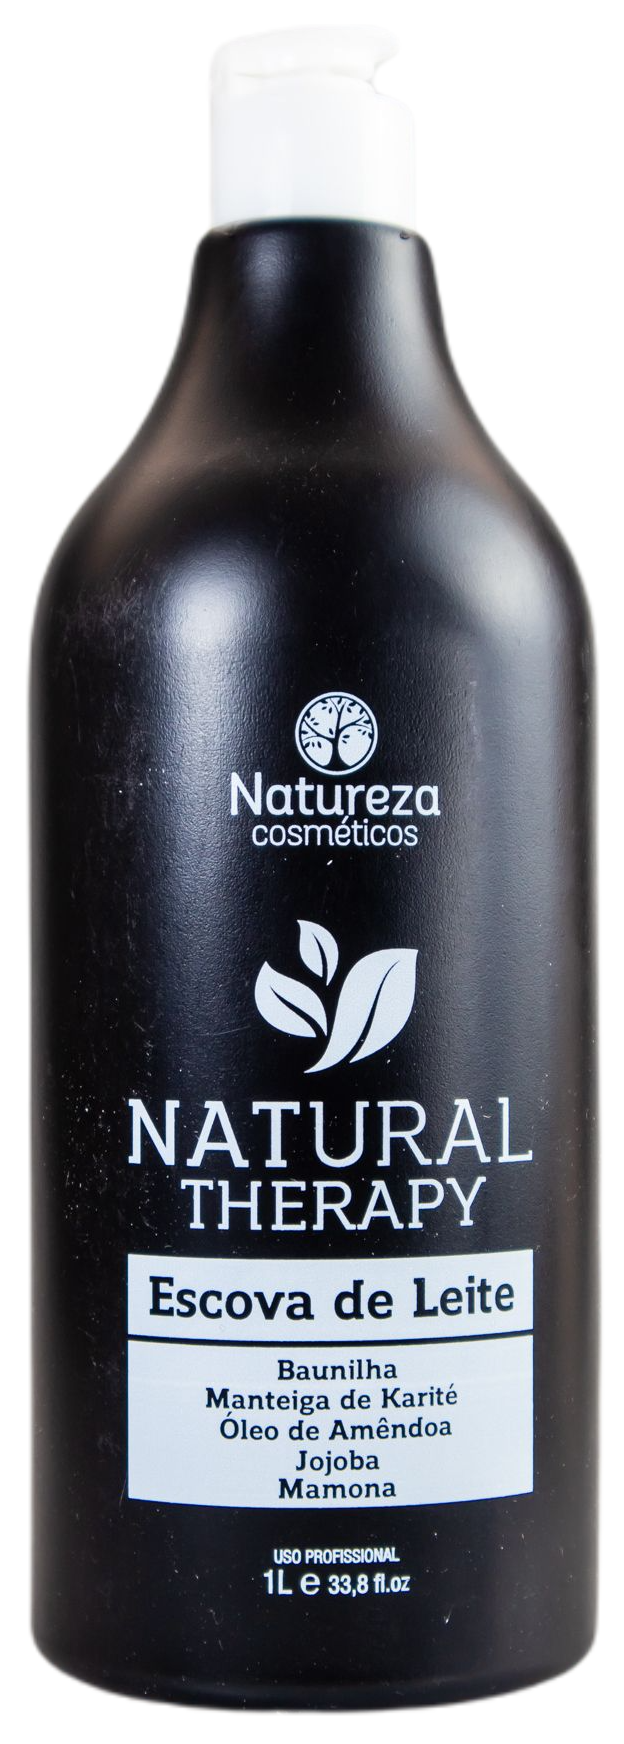 Naturharmony – Composto natural benefit – RB-Professional